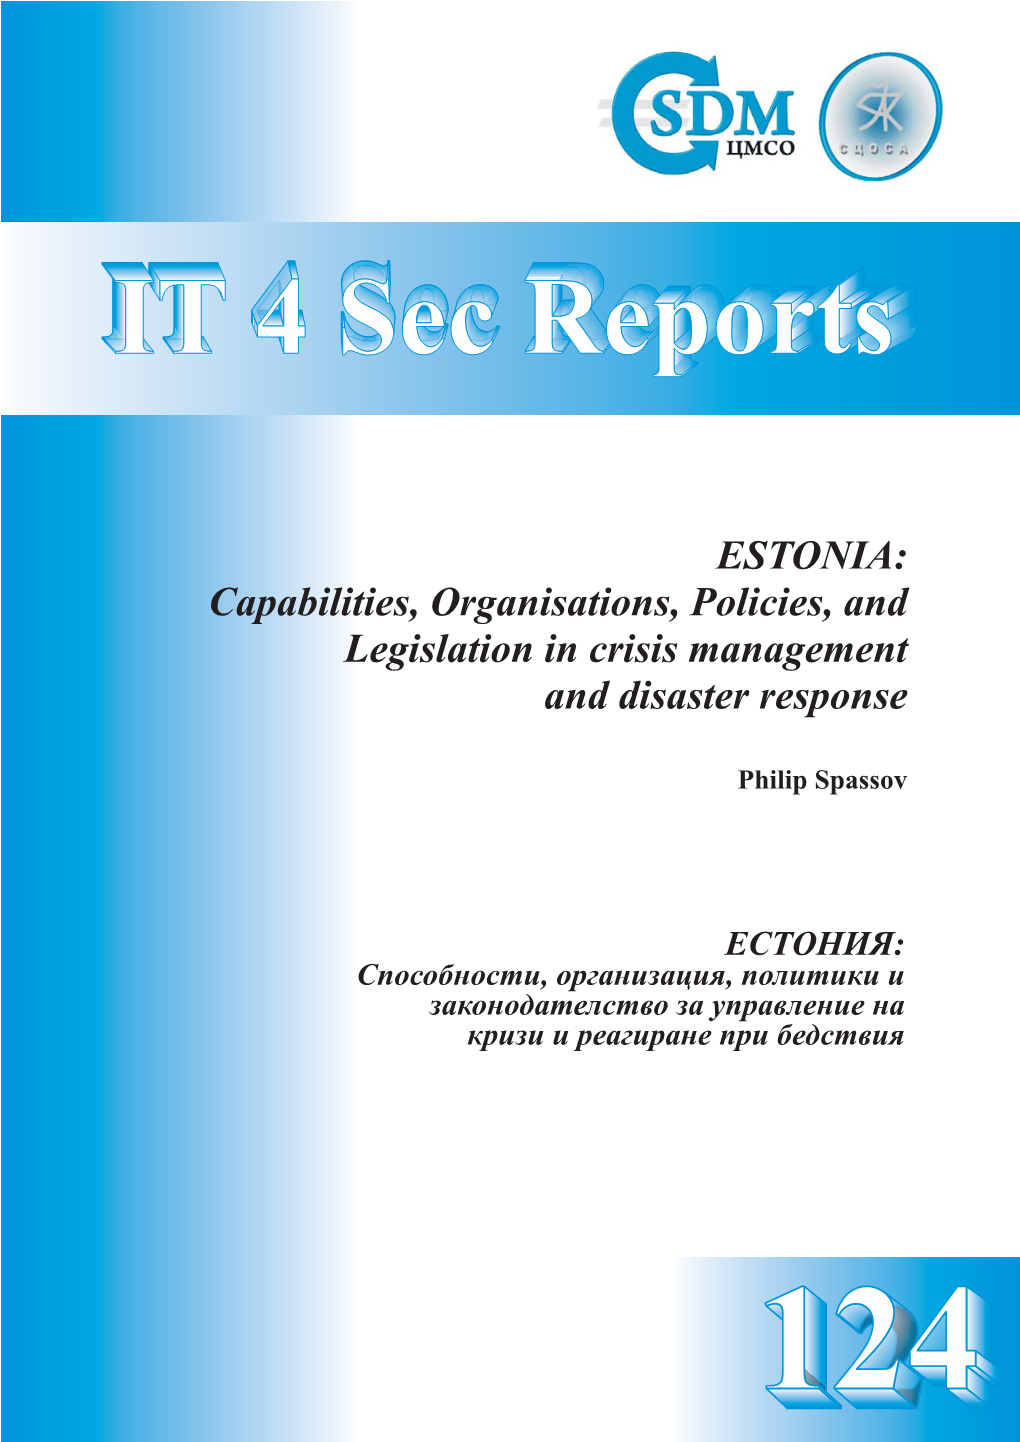 ESTONIA: Capabilities, Organisations, Policies, and Legislation in Crisis Management and Disaster Response